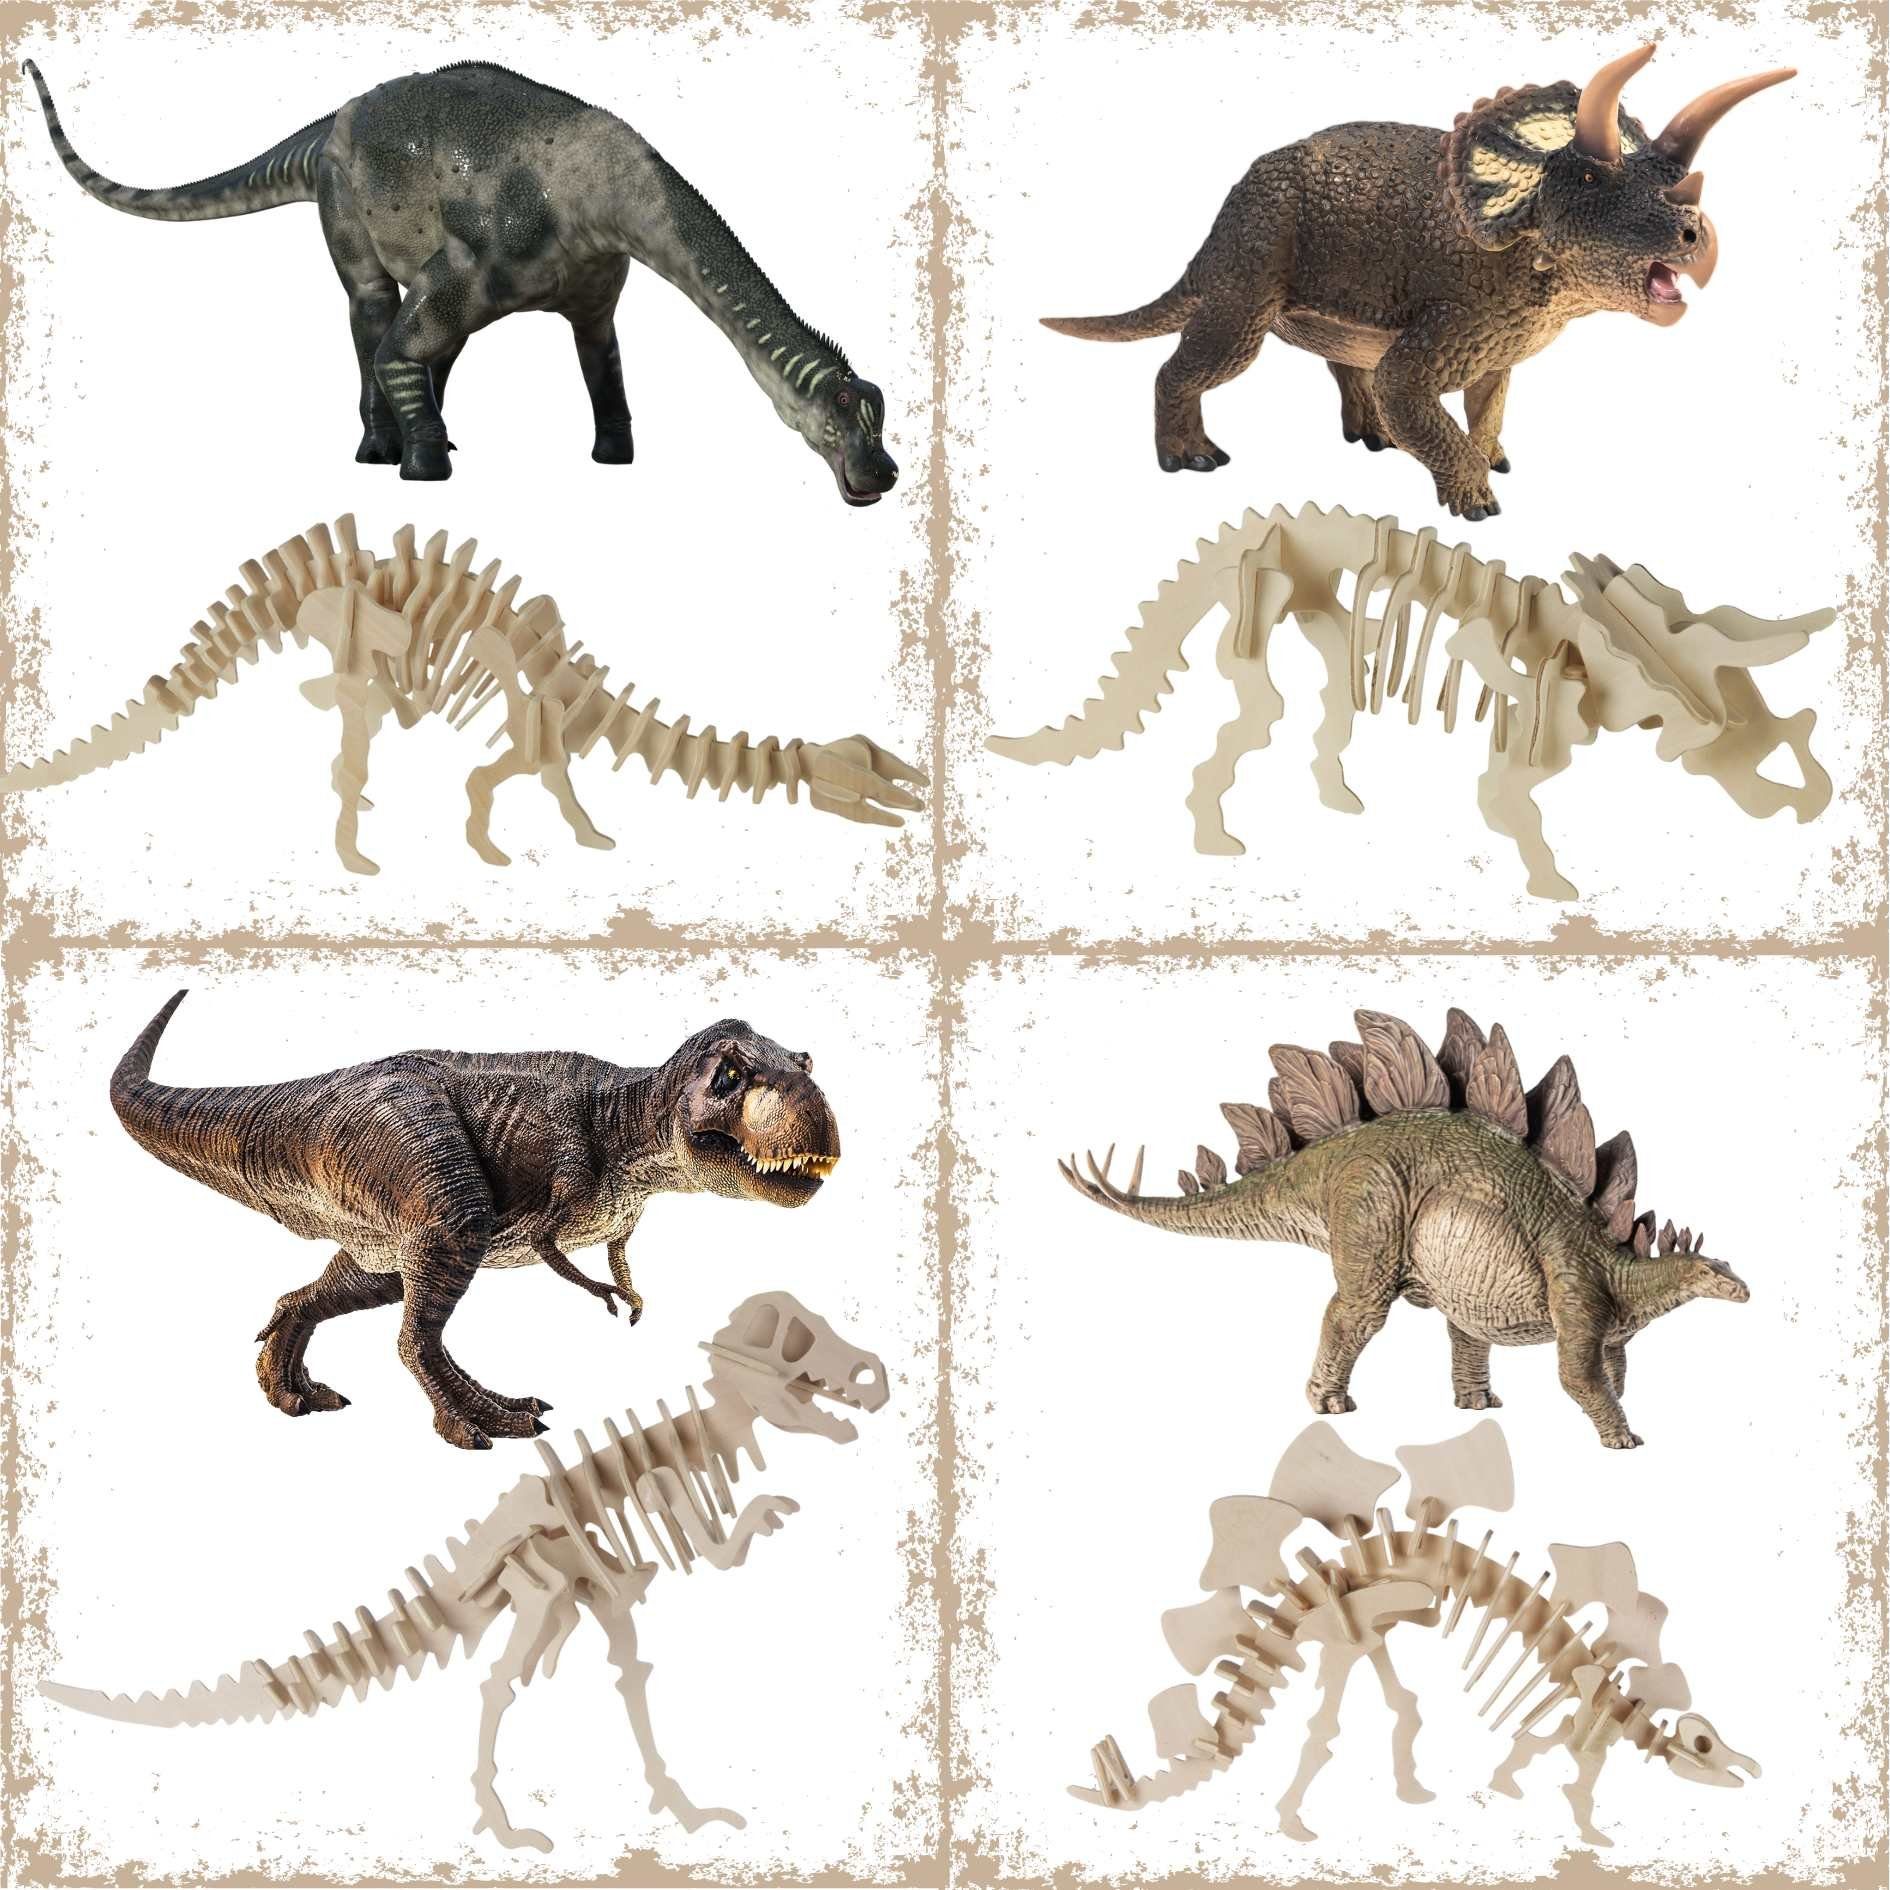 Bada Bing 3D-Puzzle 4er Set Dino Dinosaurier 3D Holzpuzzle Kinder 131 Puzzleteile Puzzle